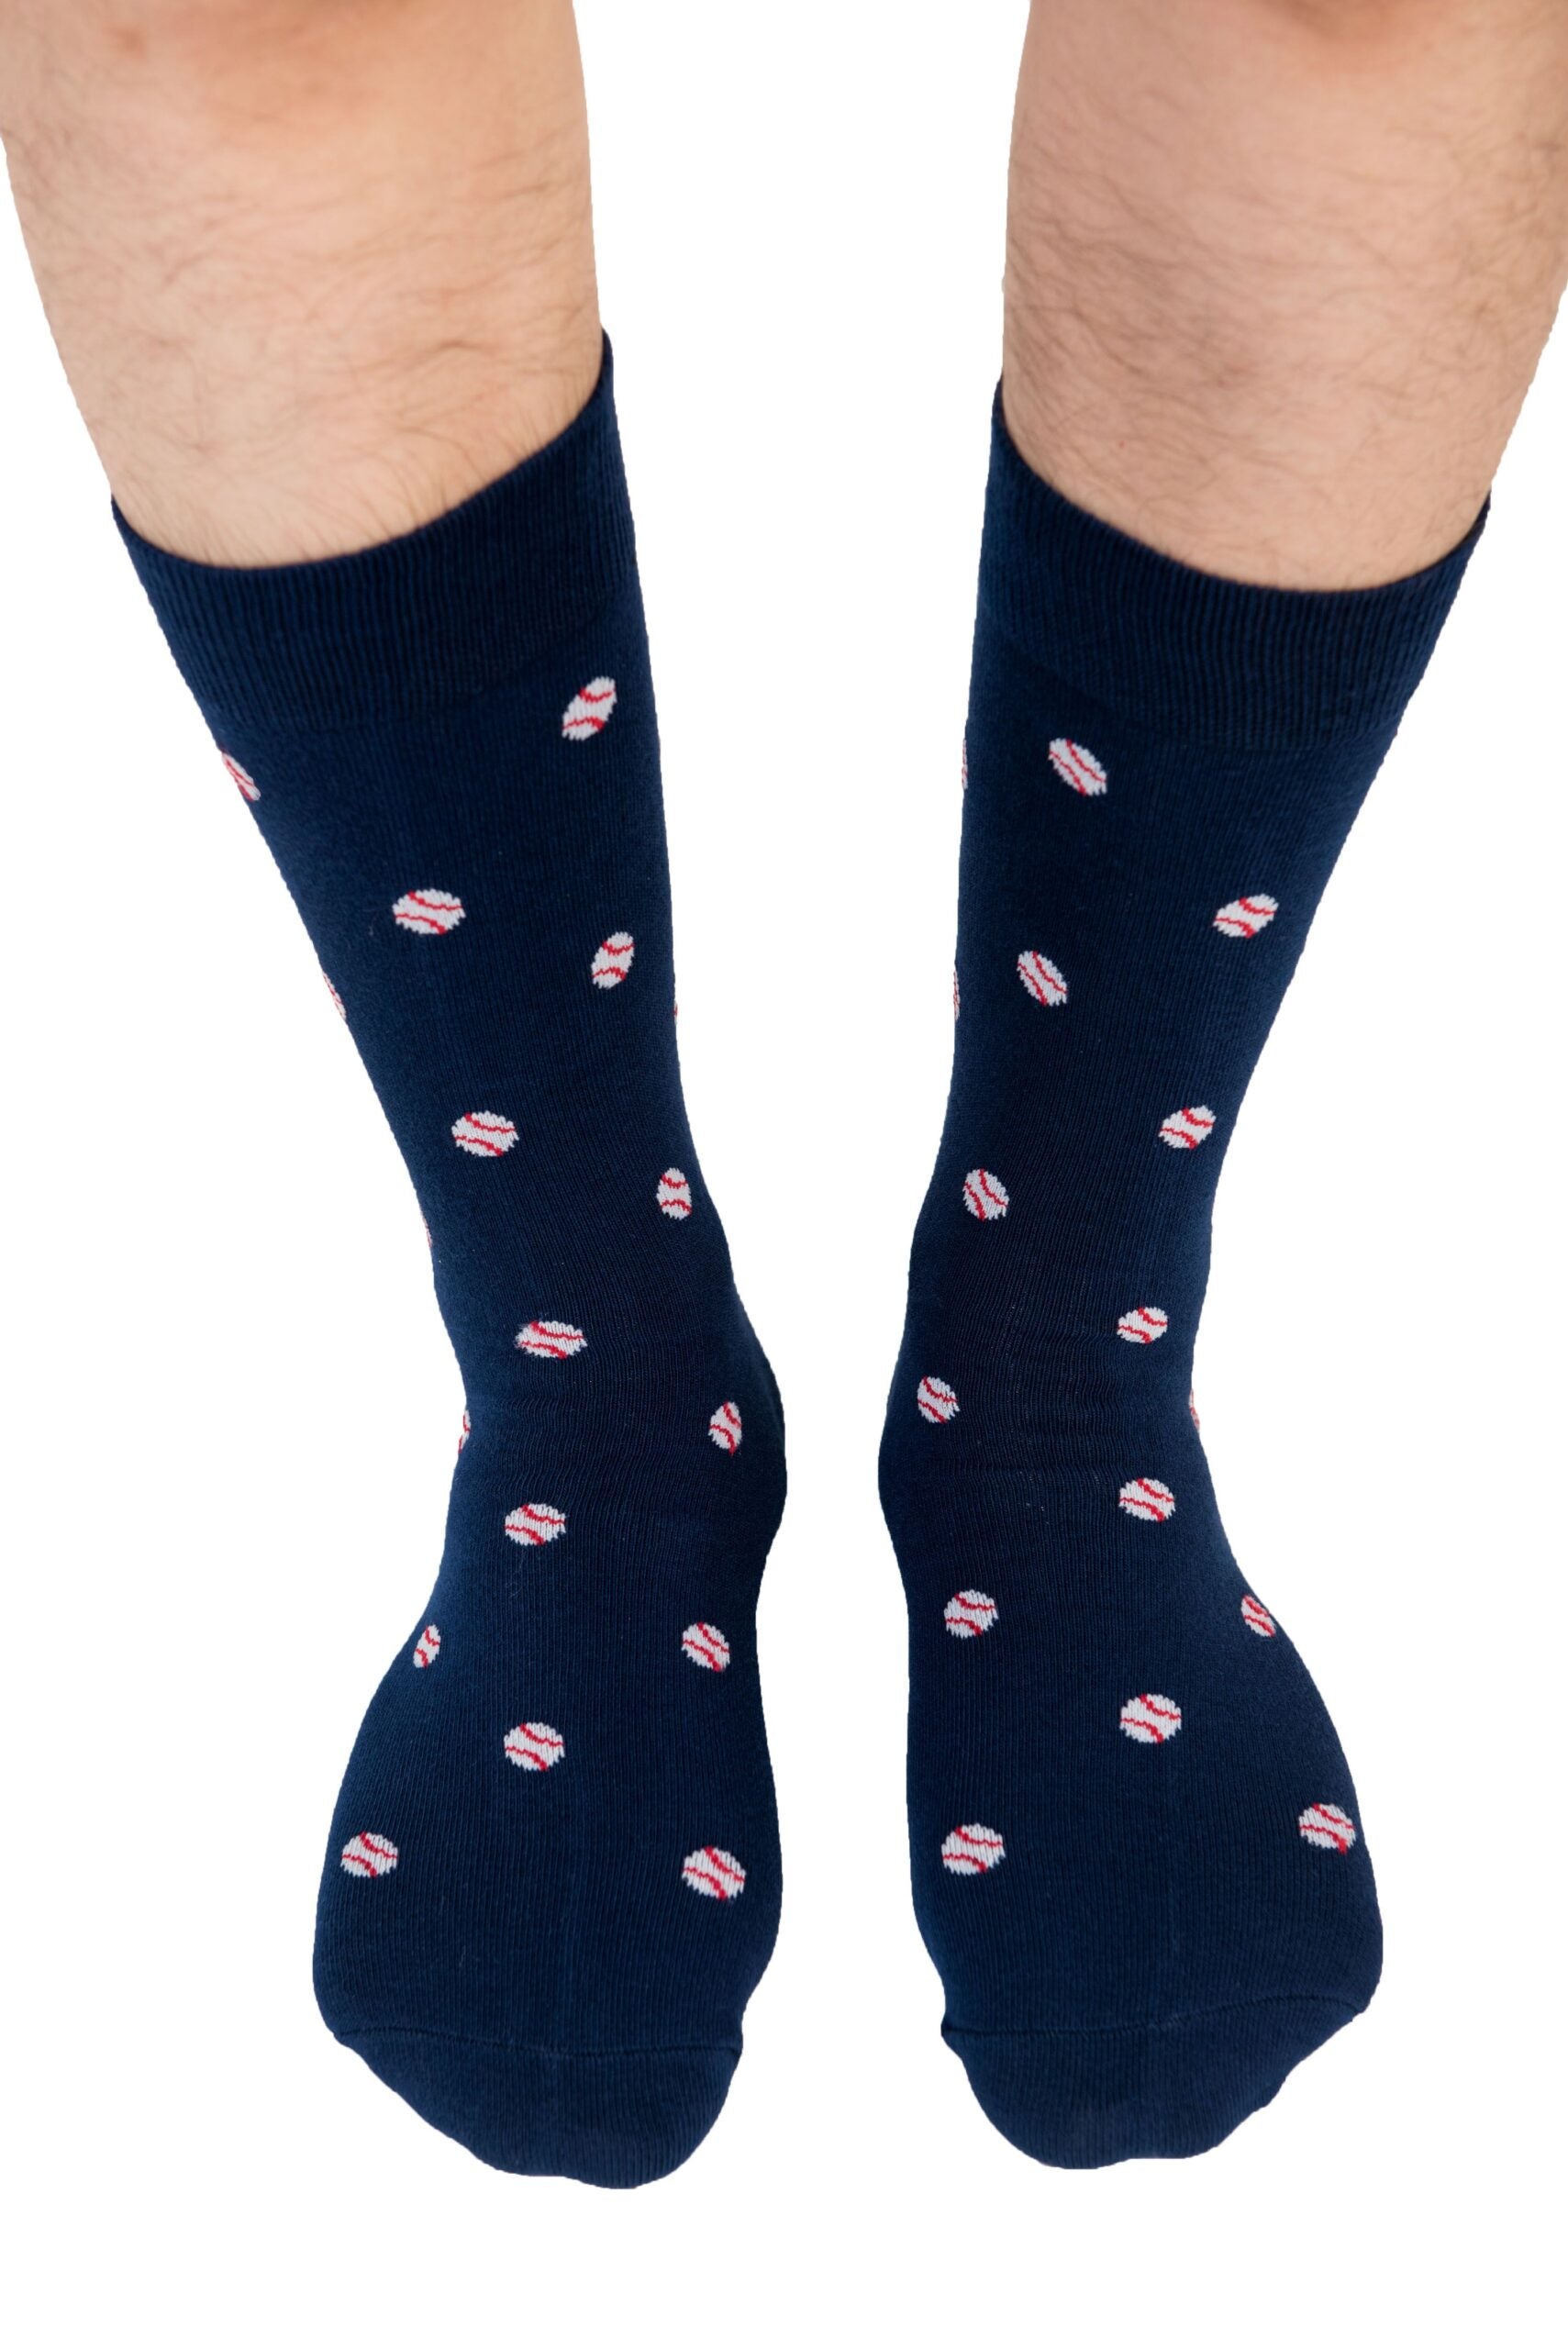 A pair of feet adorned with blue Baseball Socks featuring miniature baseballs.